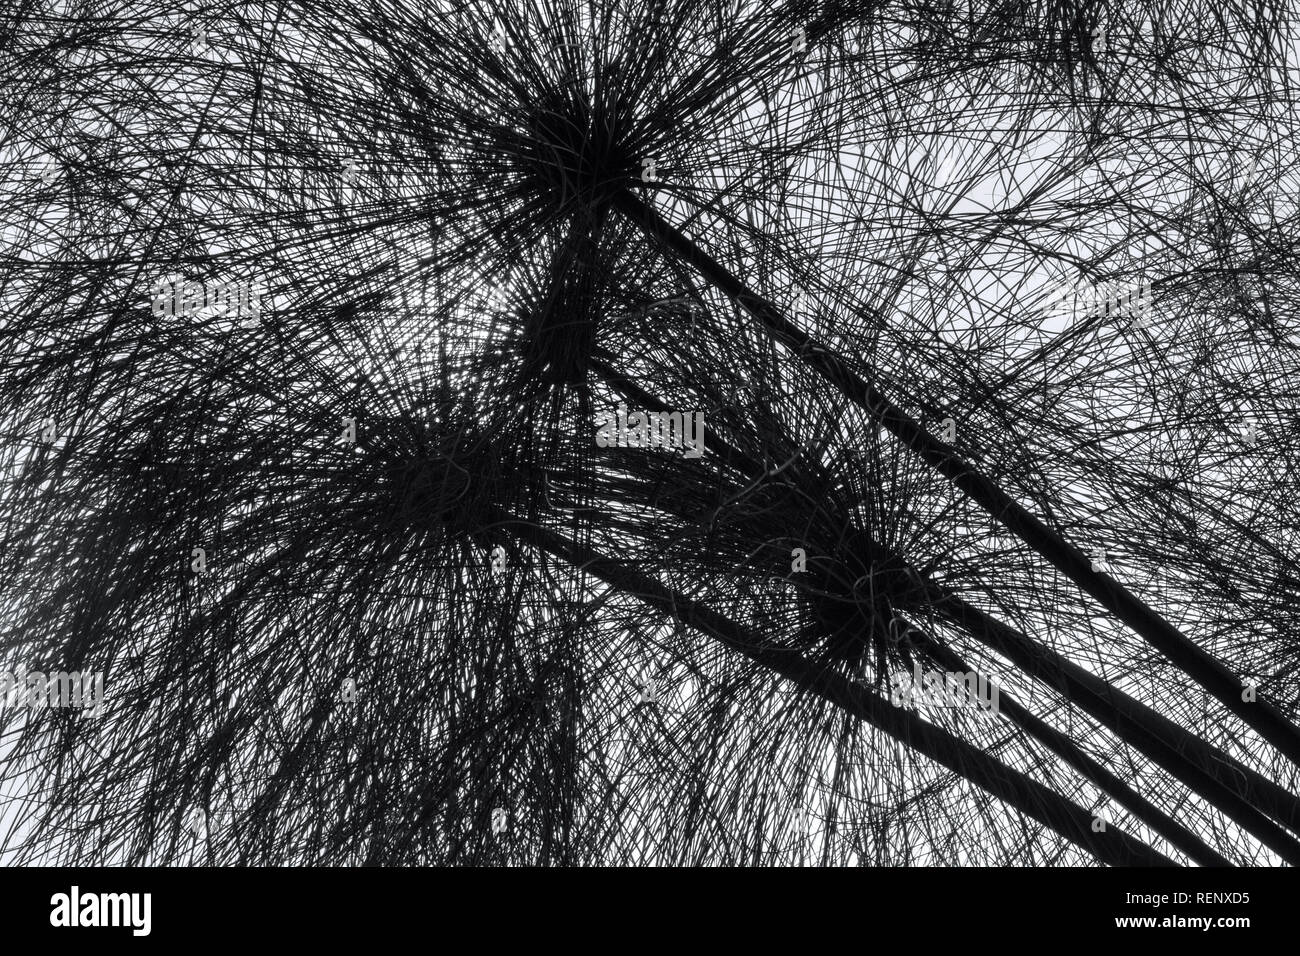 Wild Papyrus plants close-up in monochrome Stock Photo